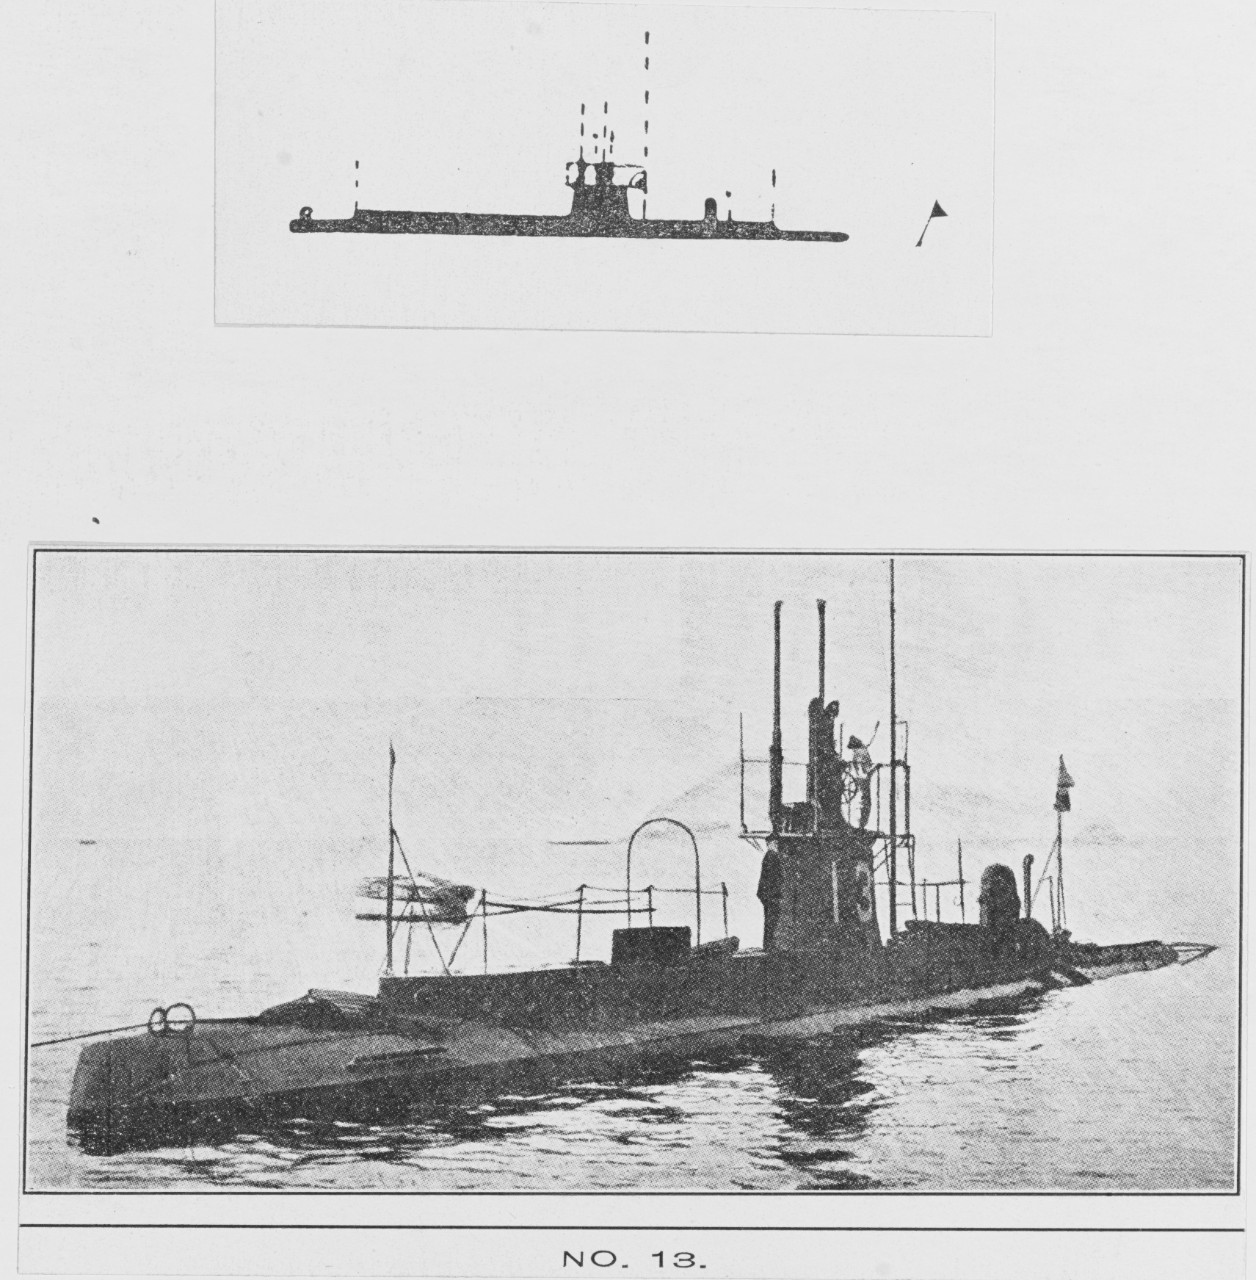 Japanese Submarine No. 13